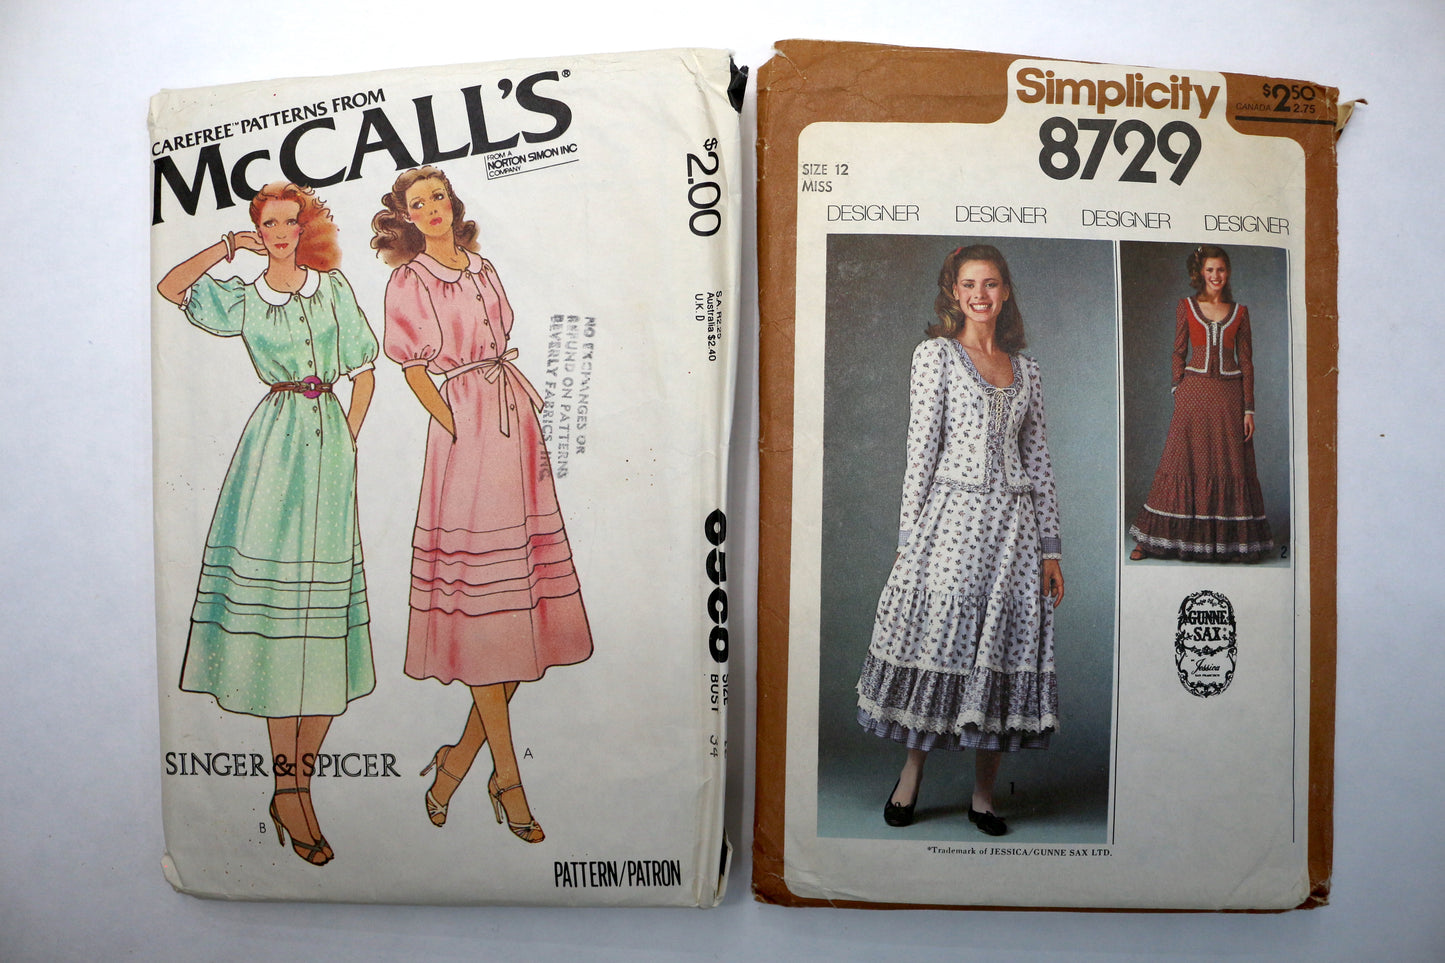 McCalls 6568 Boho Style Dress Sewing Pattern or Simplicity 8729 Gunne Sax Sewing Pattern